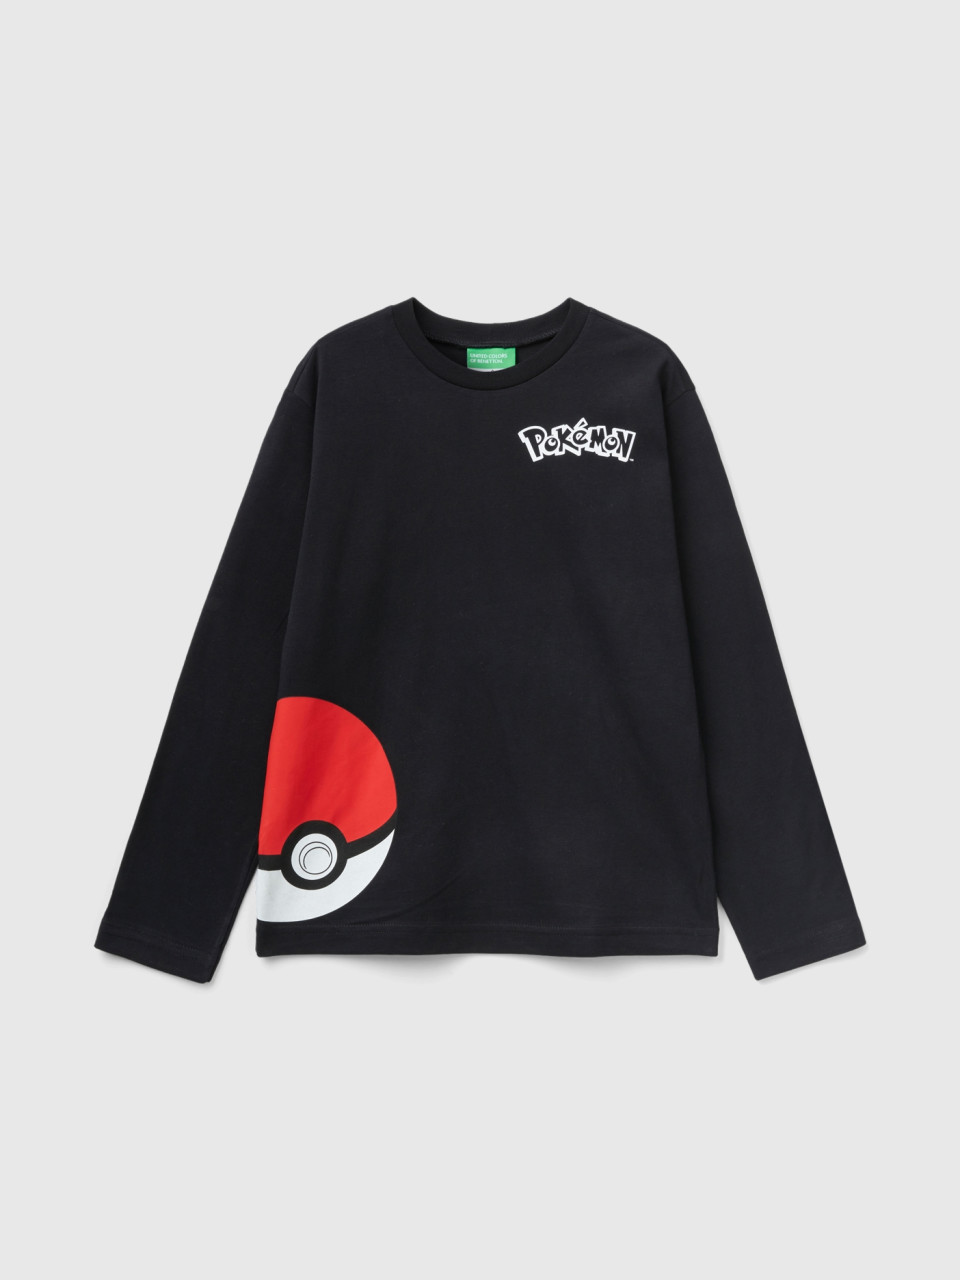 Benetton, 100% Cotton Pokémon T-shirt, Black, Kids